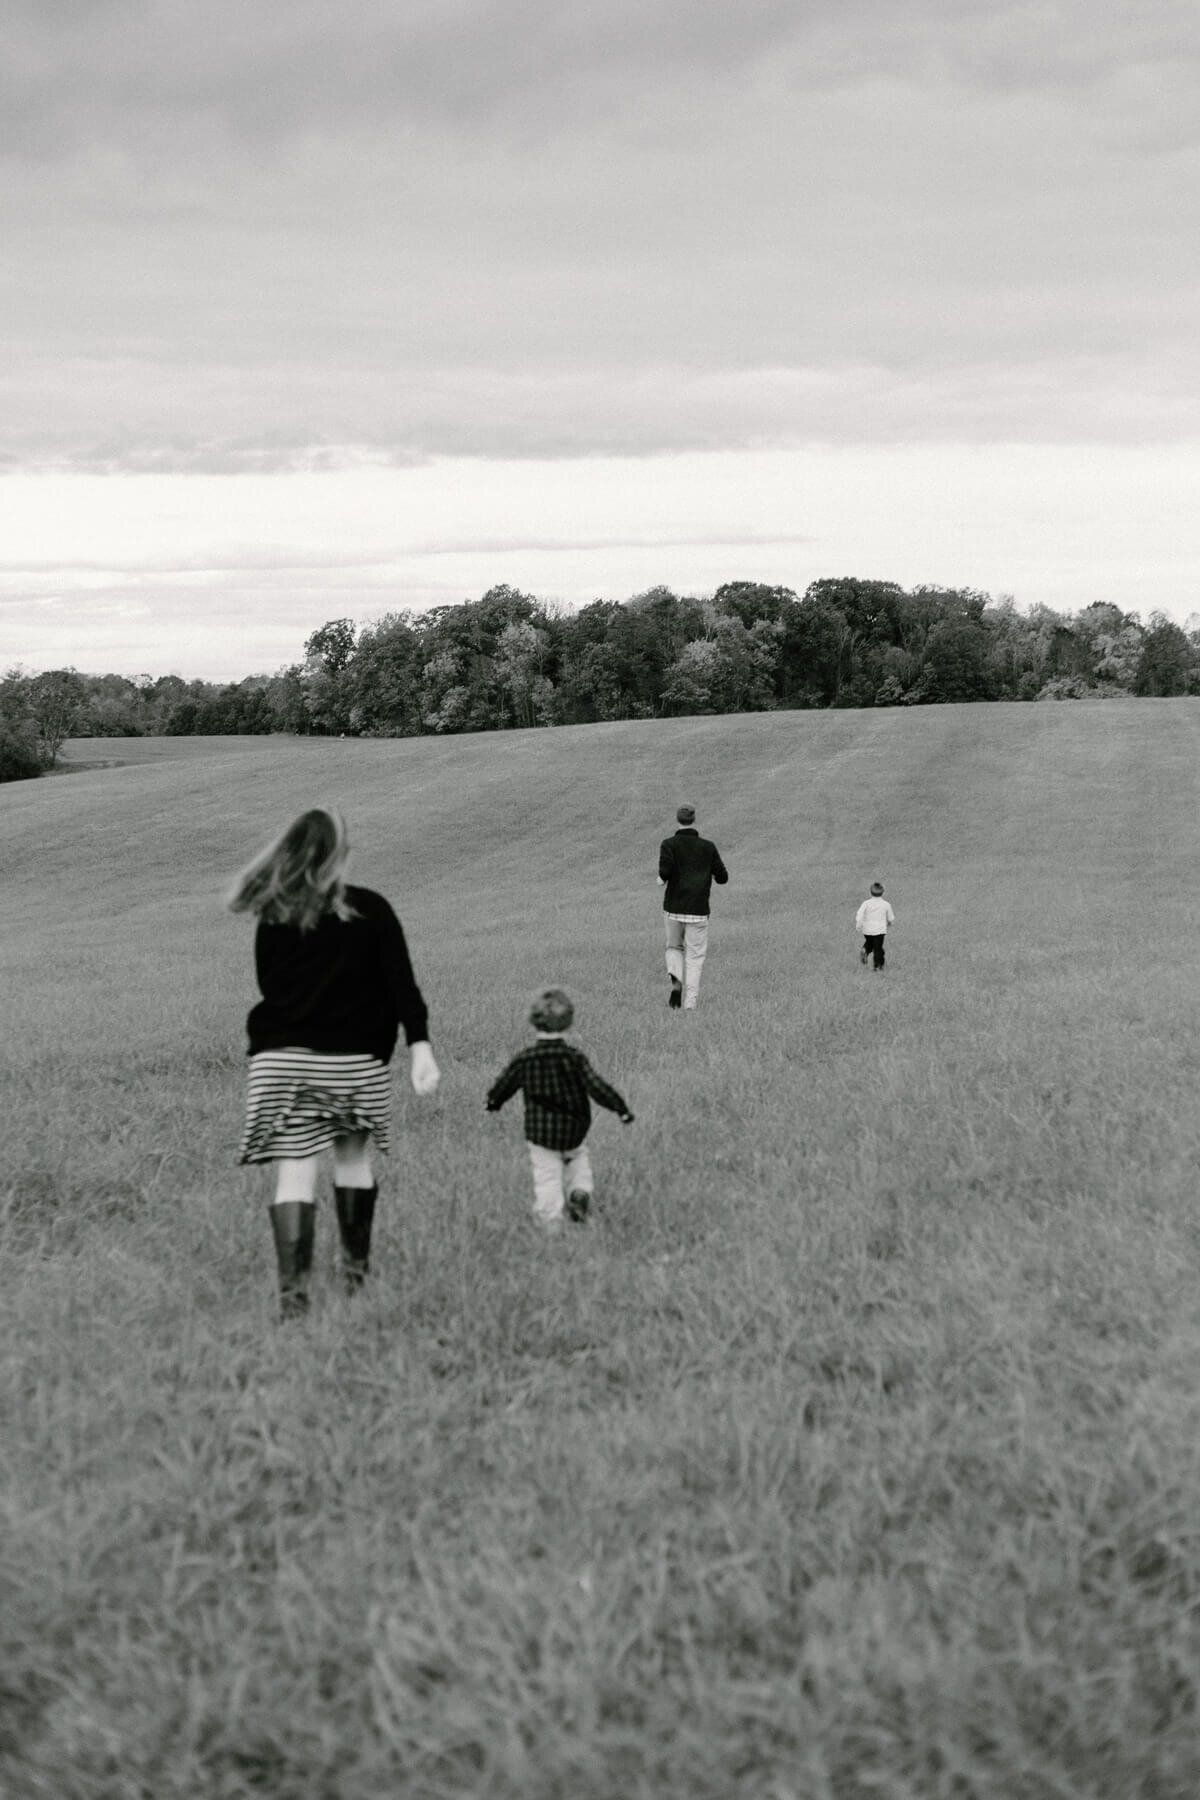 17-kara-loryn-photography-family-running-in-grassy-field